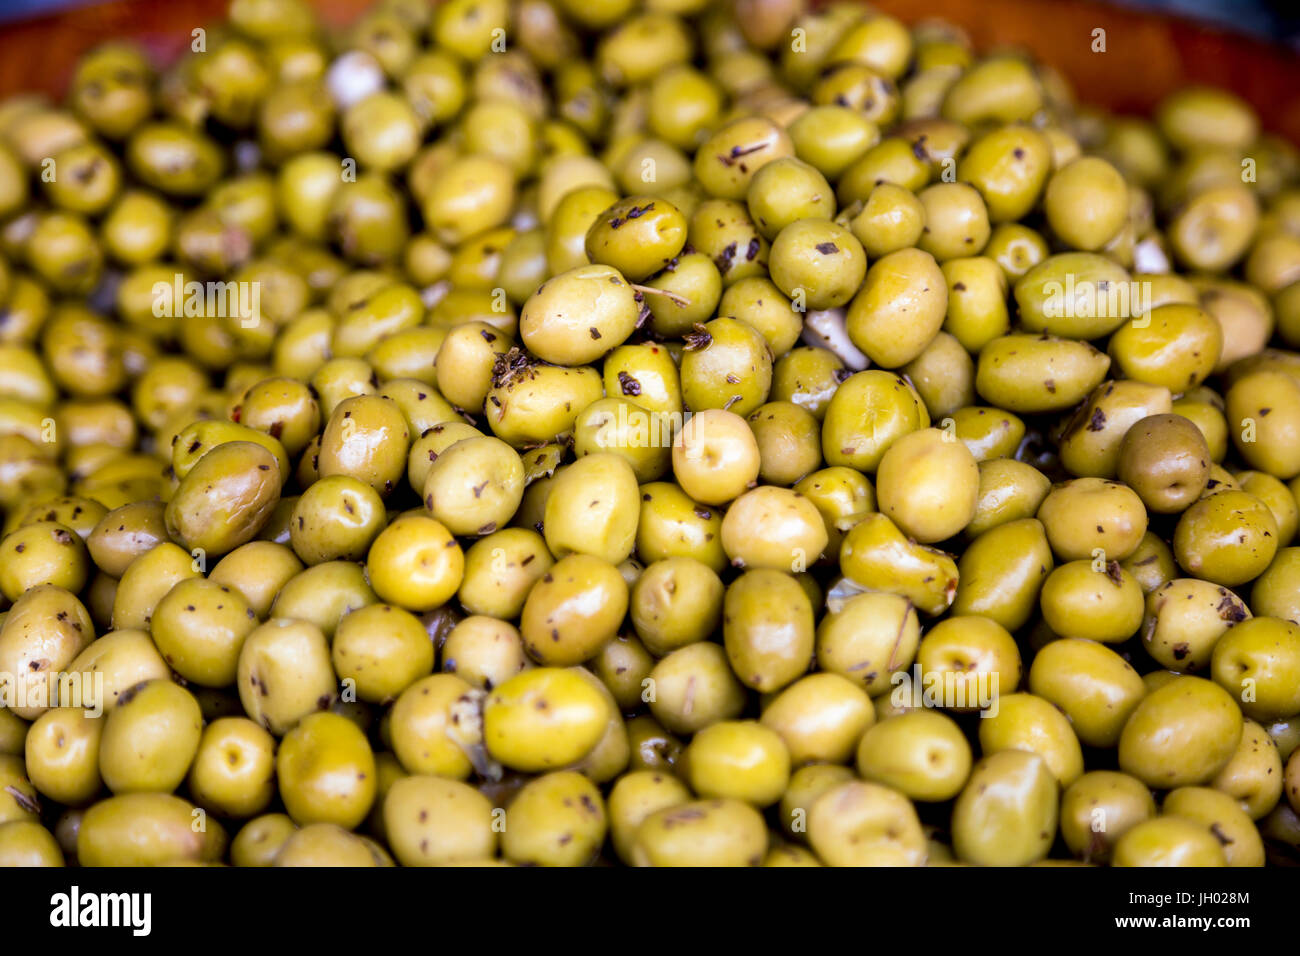 Green spiced olives at Marché de Wazemmes, Lille, France Stock Photo